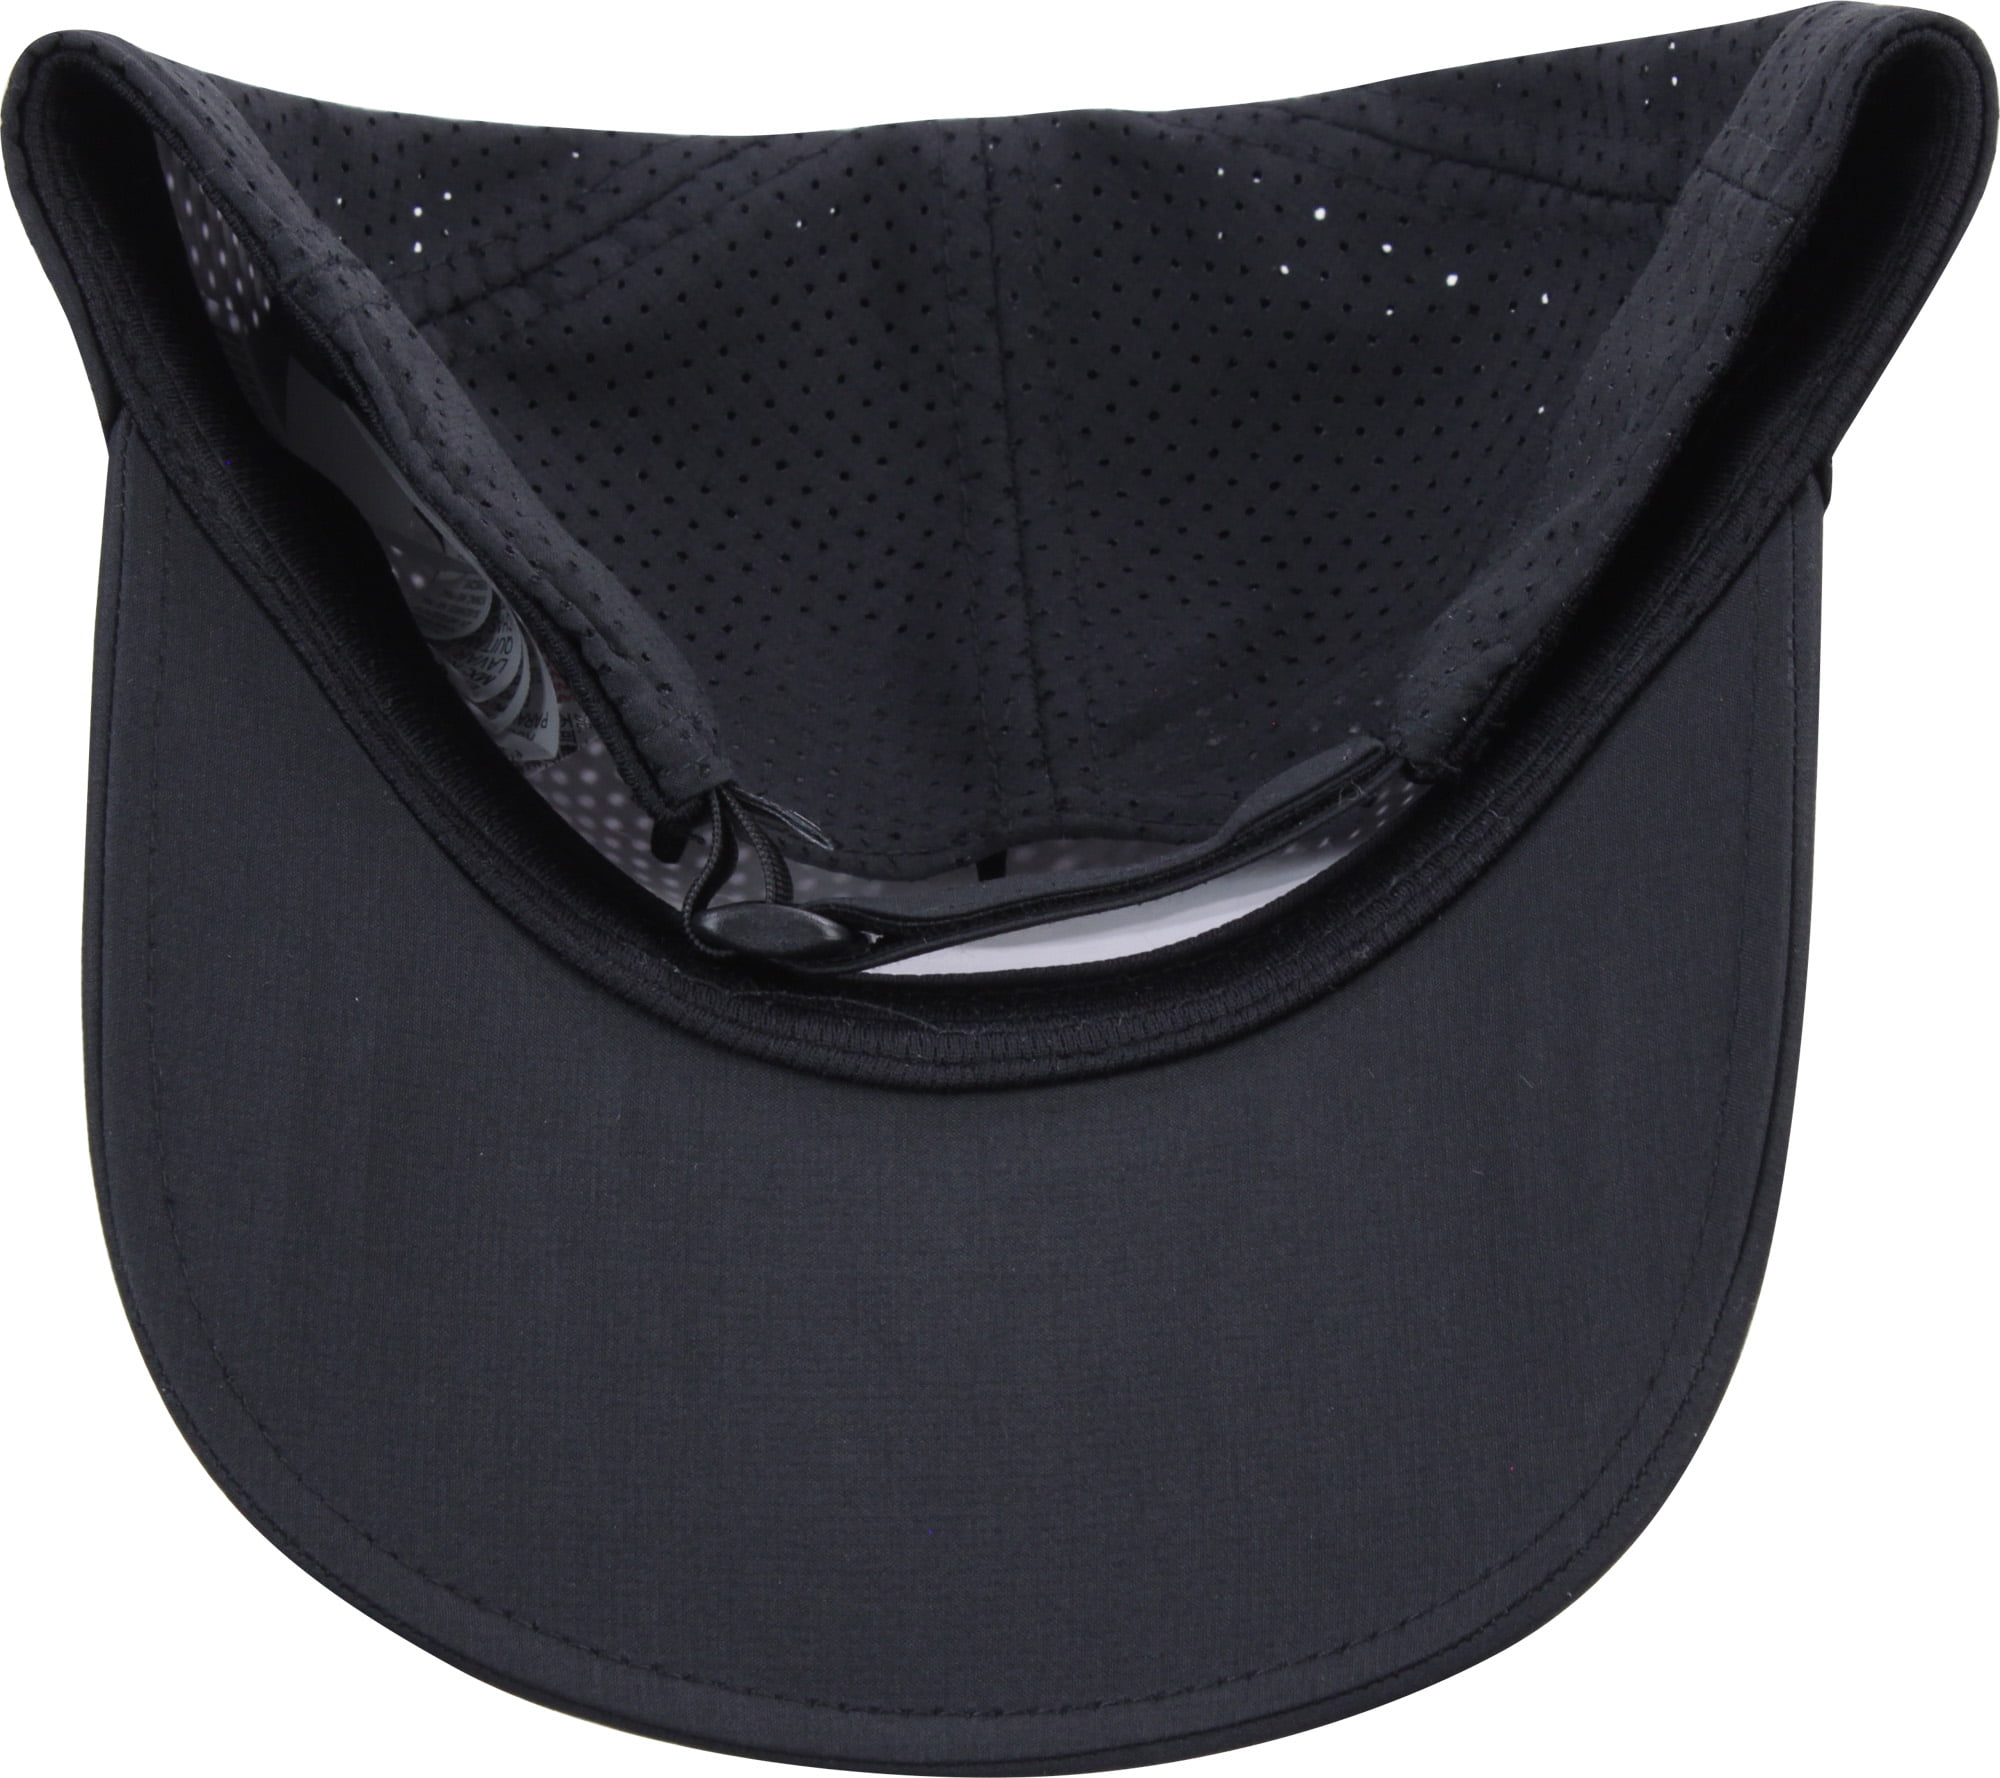 Quiksilver Mens Tech Stashin Adjustable Strapback Hat - Black